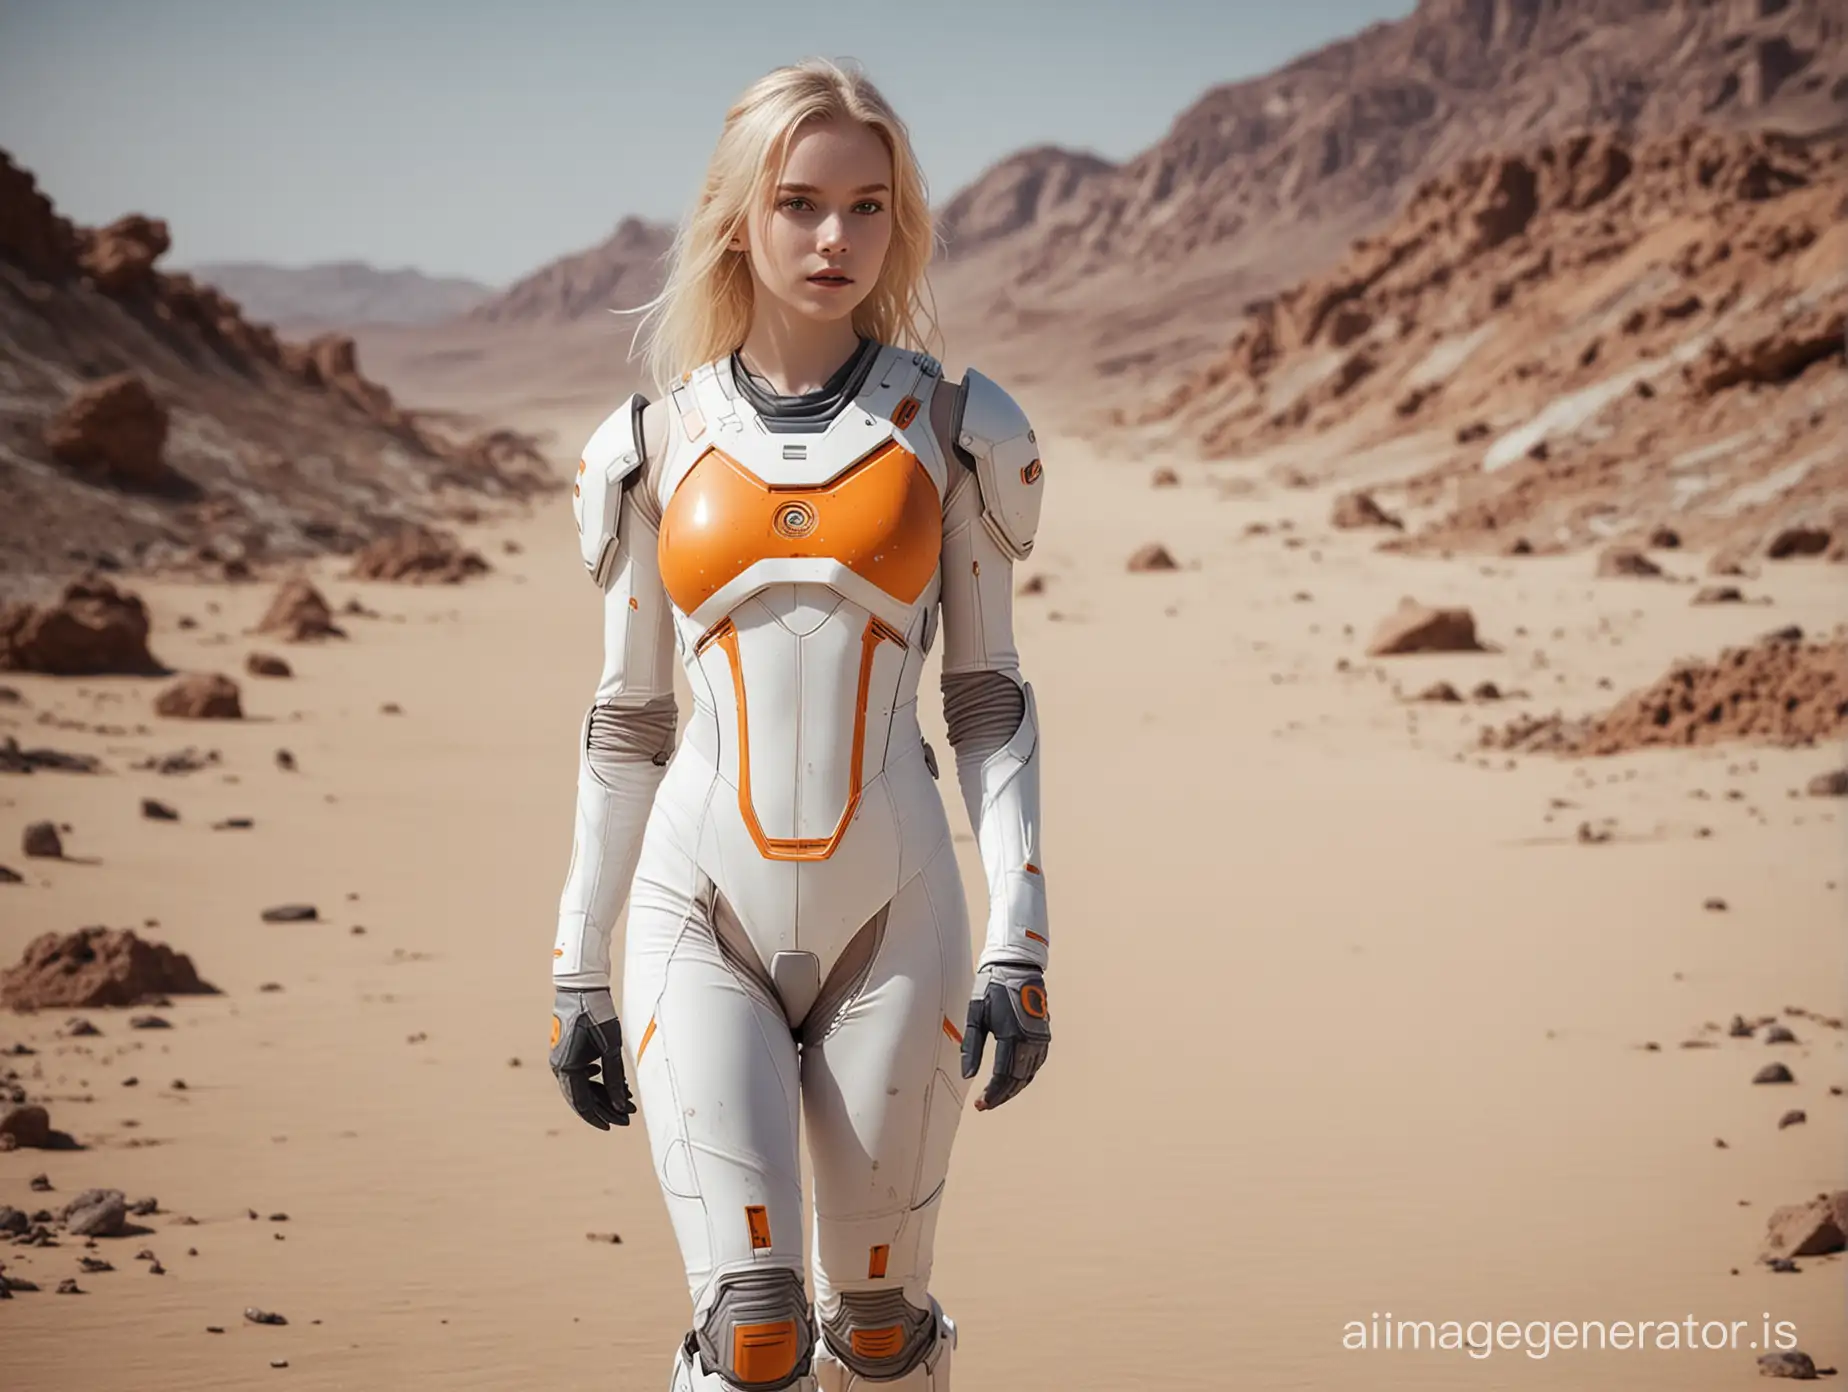 sixteen years old cute blonde walking in a deserted exo-planet, she wears white orange bodysuit as uniform, blueish scene